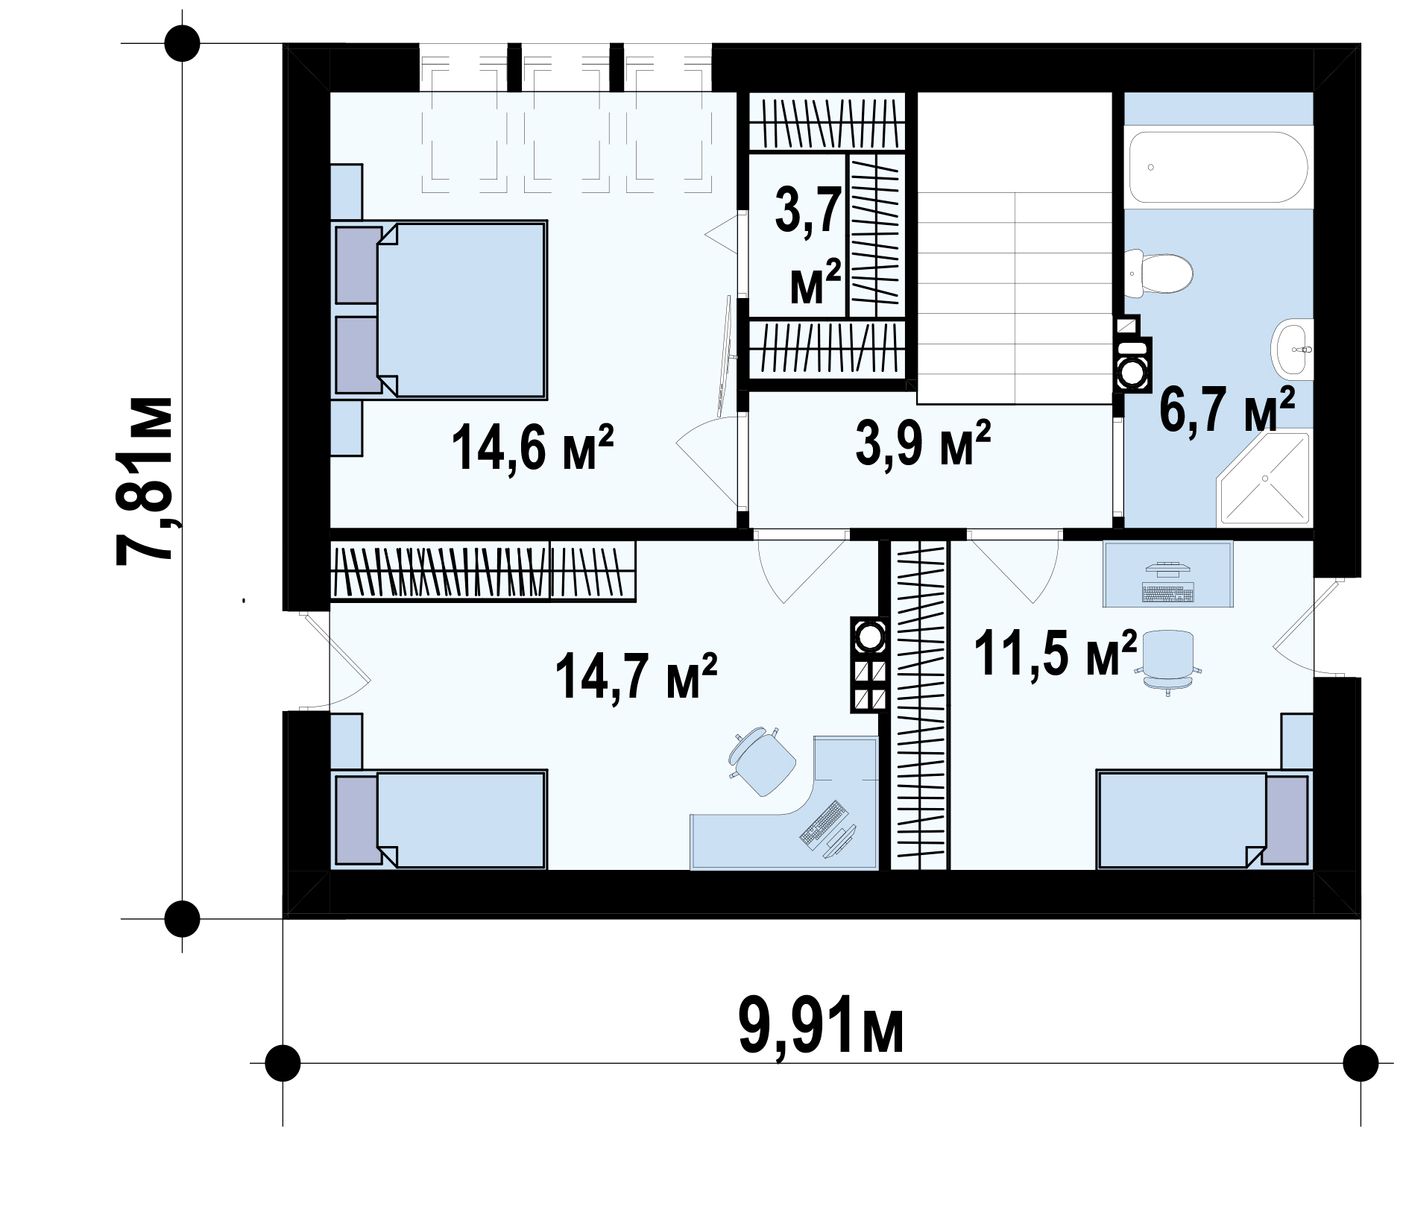 2-ой этаж - план проекта Z229